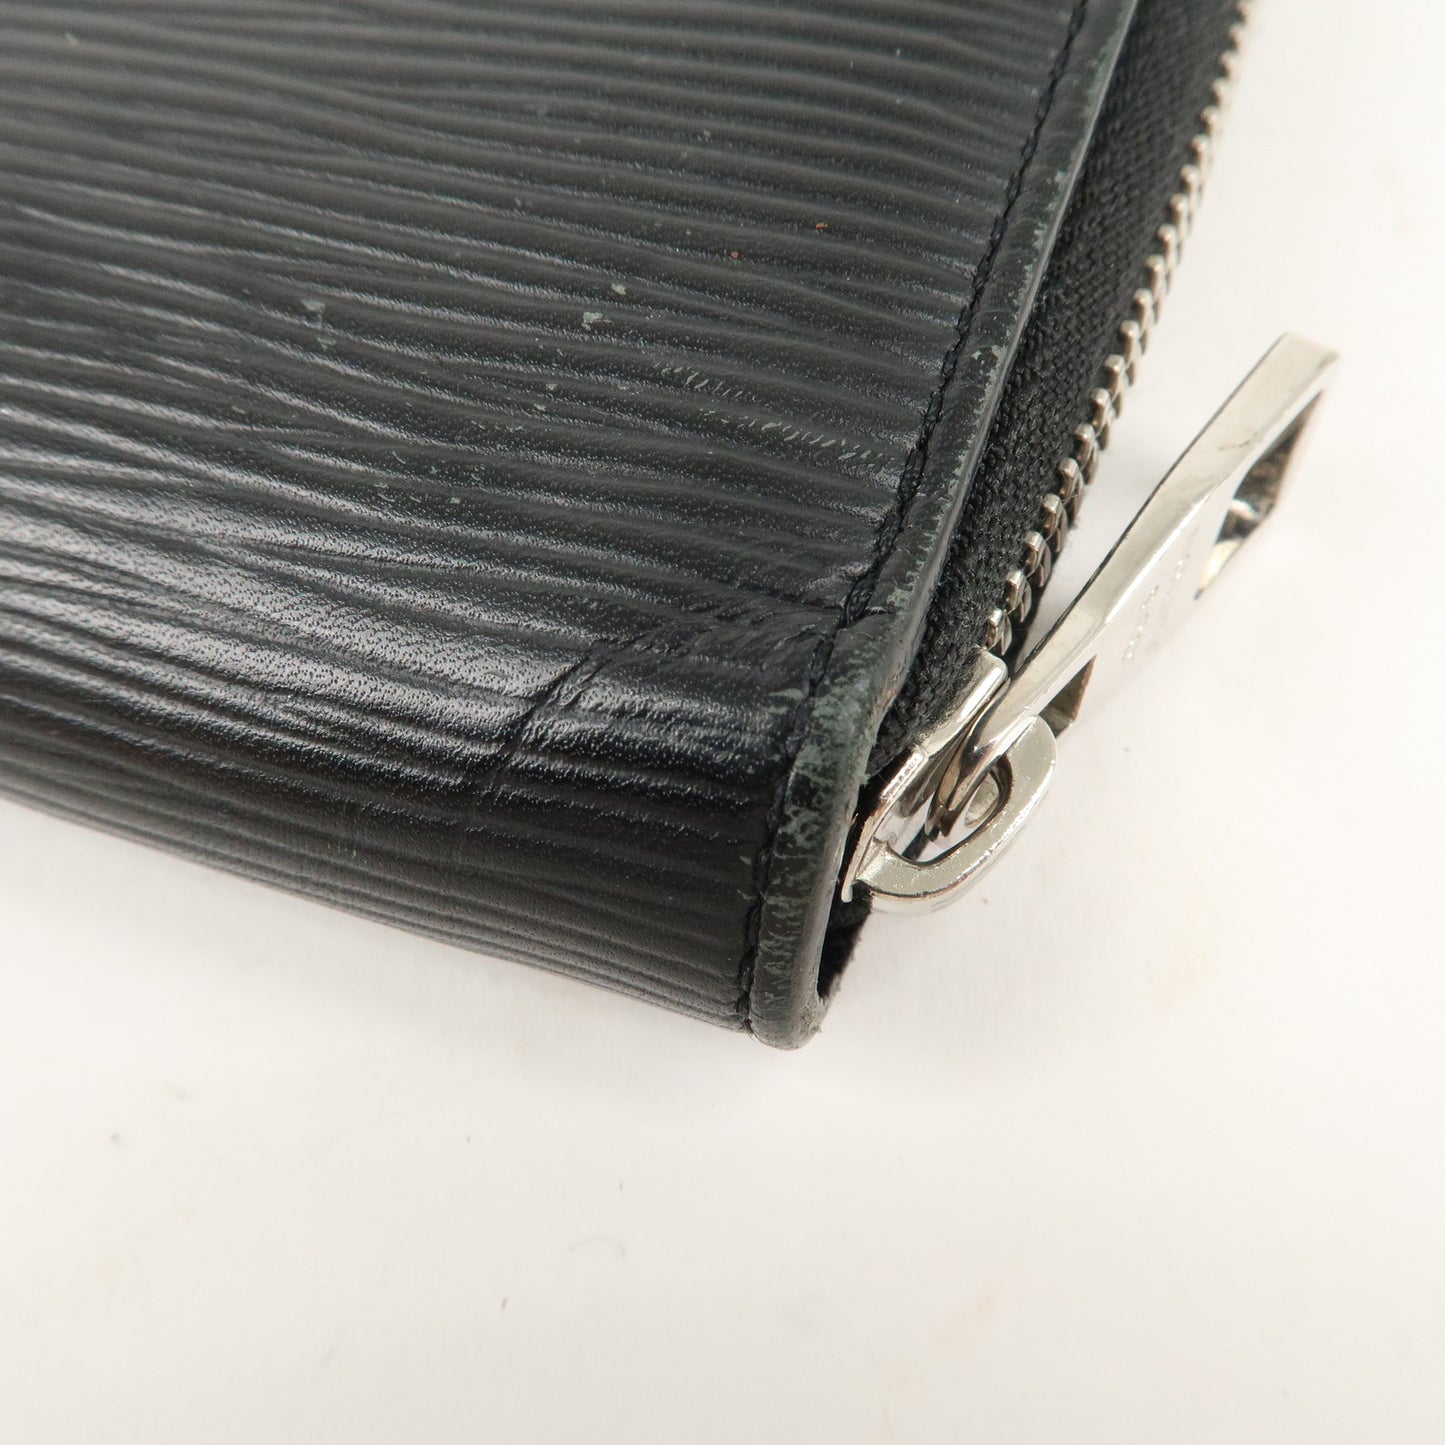 Louis Vuitton Epi Zippy Organizer Wallet Black Noir M63852